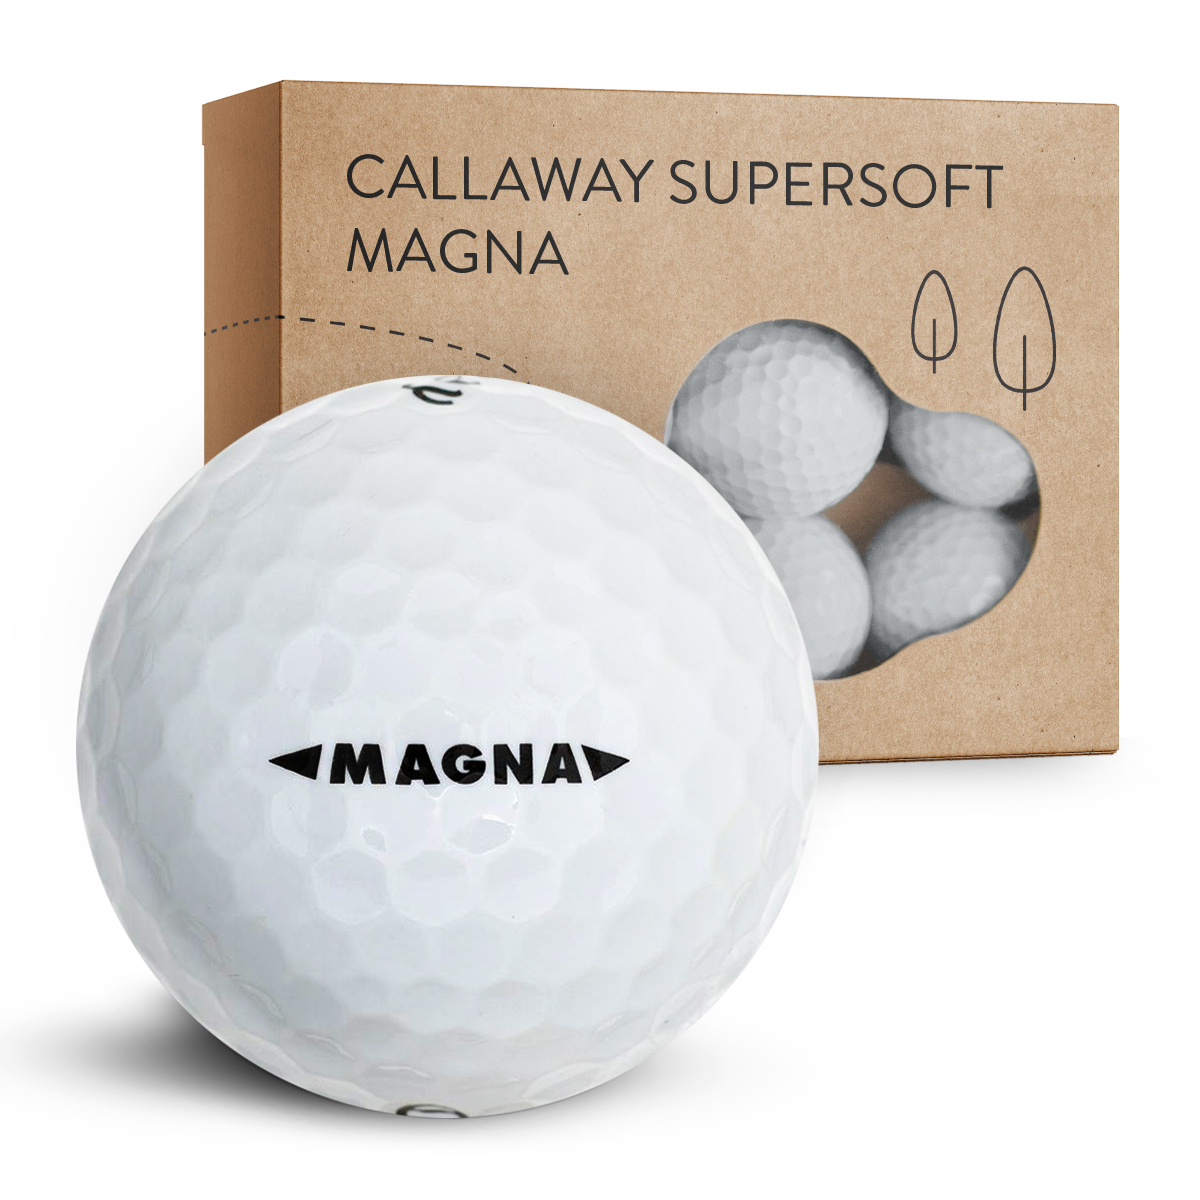 Callaway Supersoft Magna